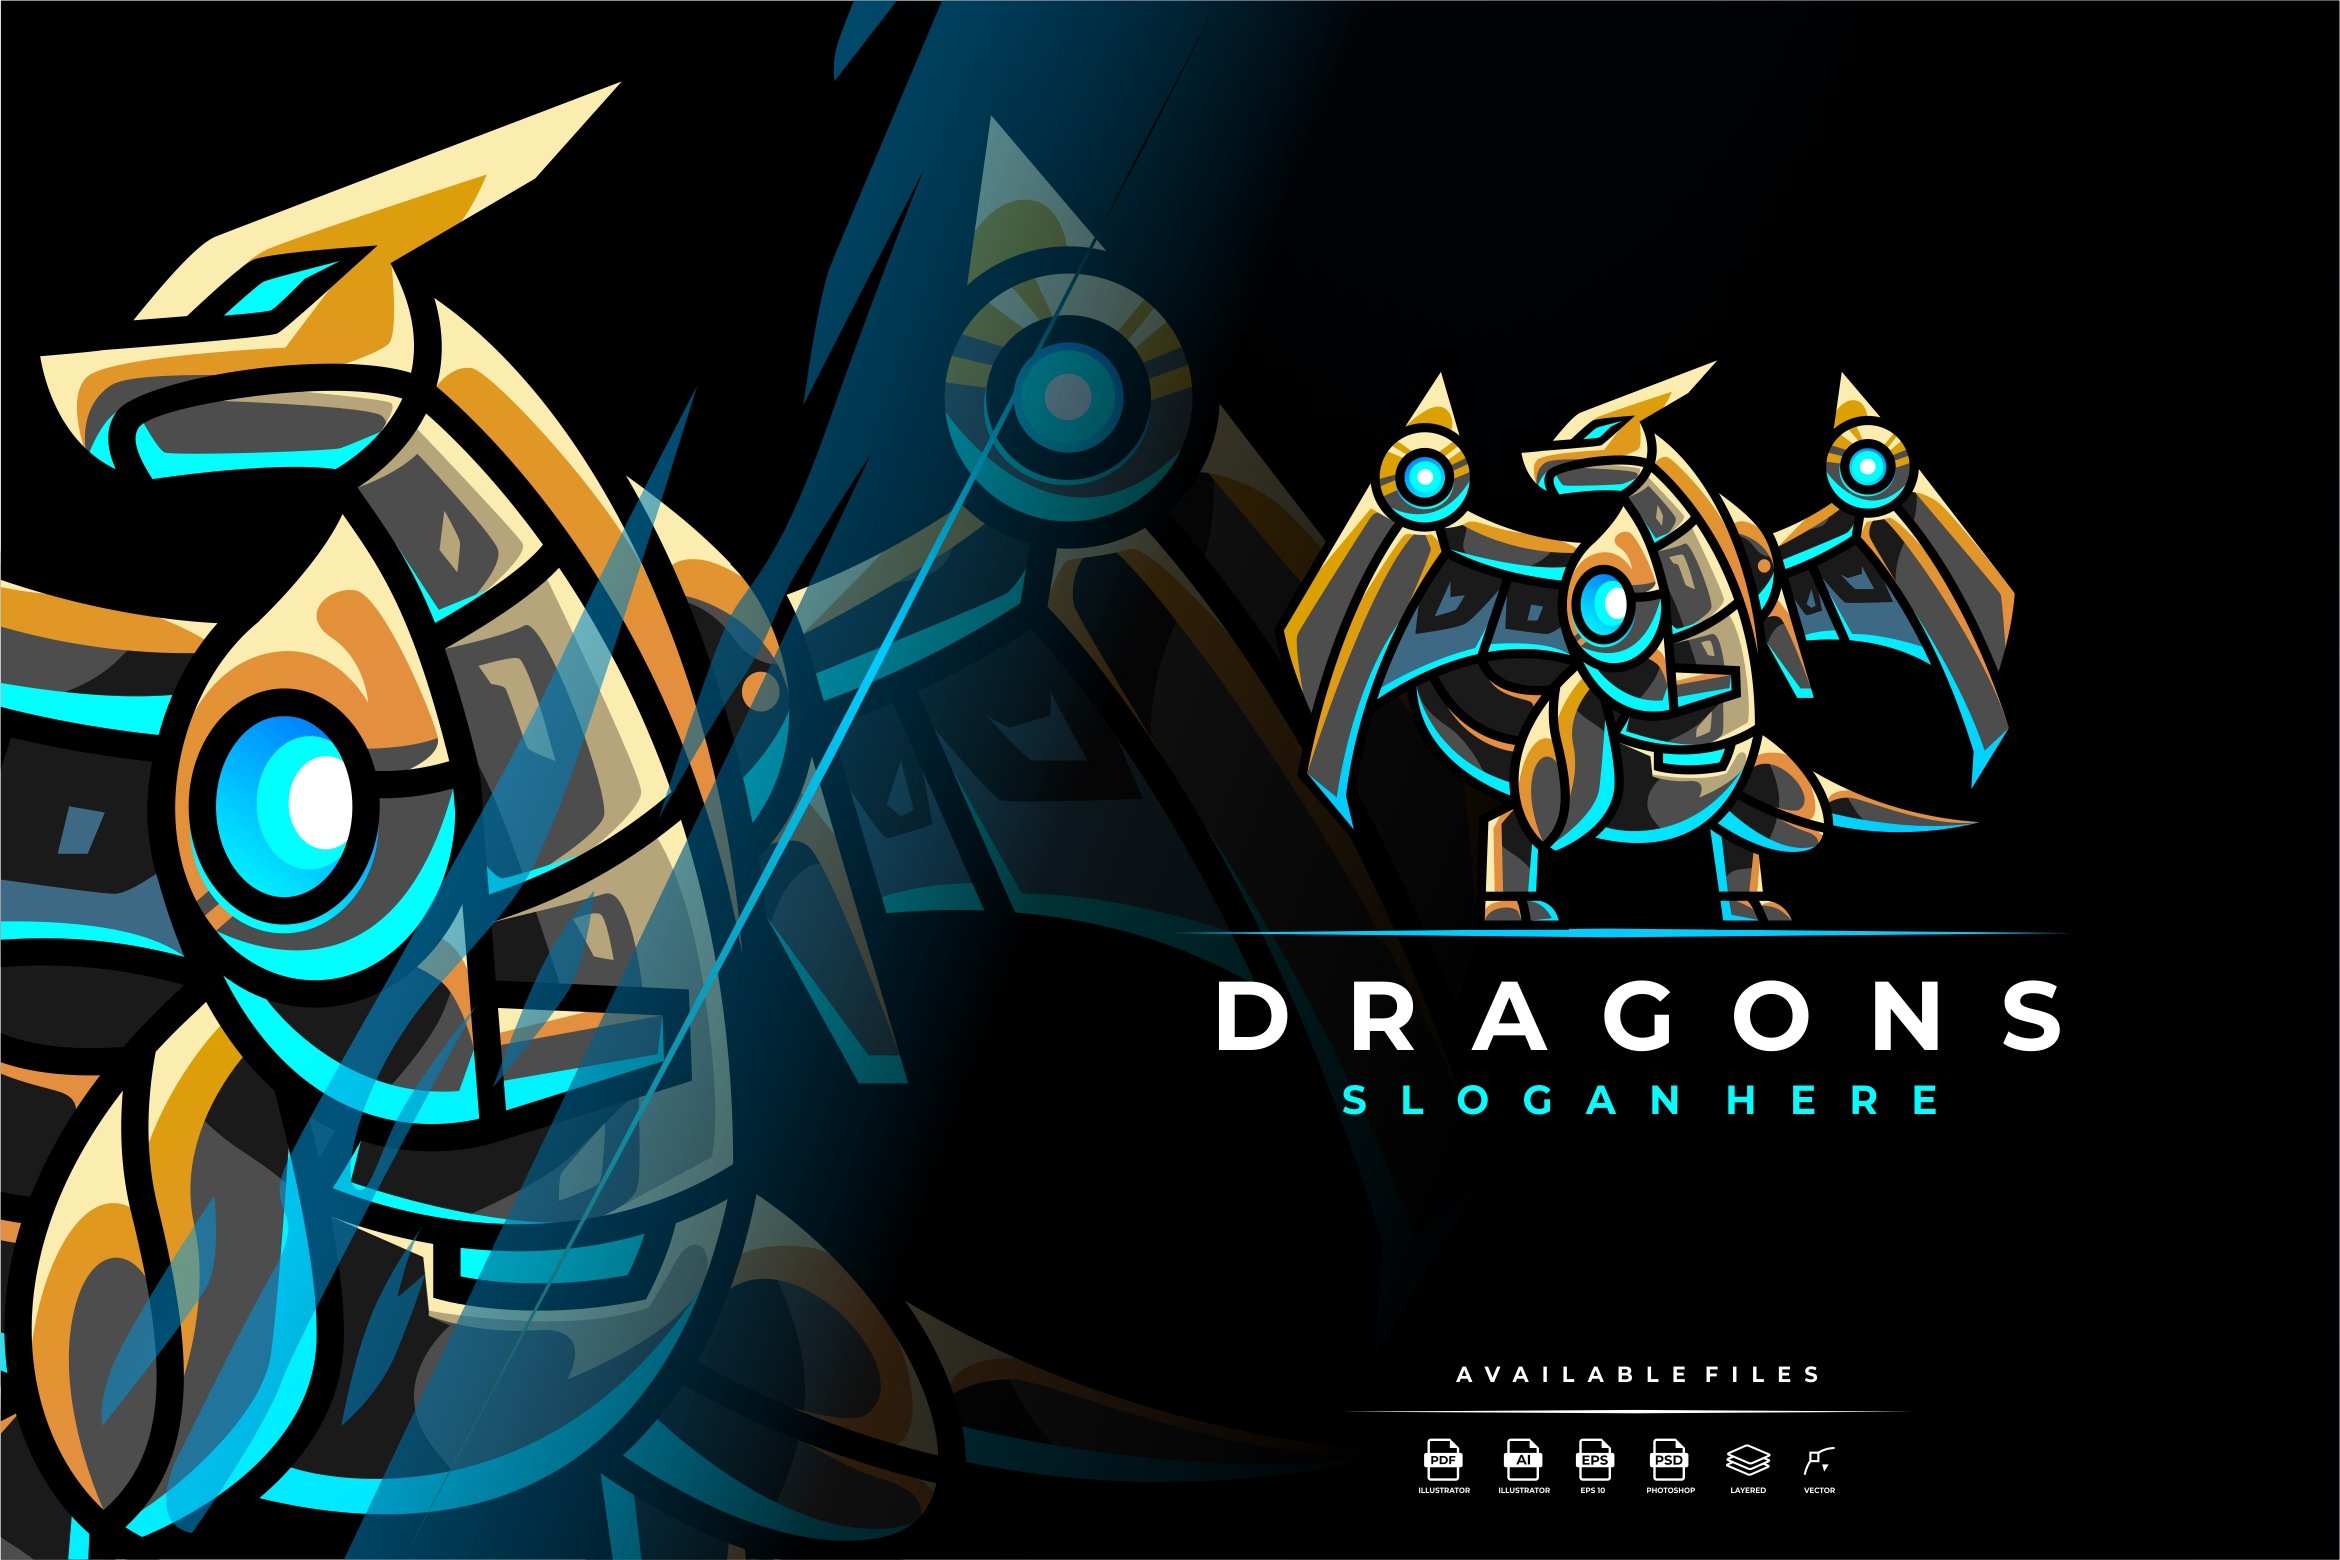 Unique Robotic Dragon Mascot Logo cover image.